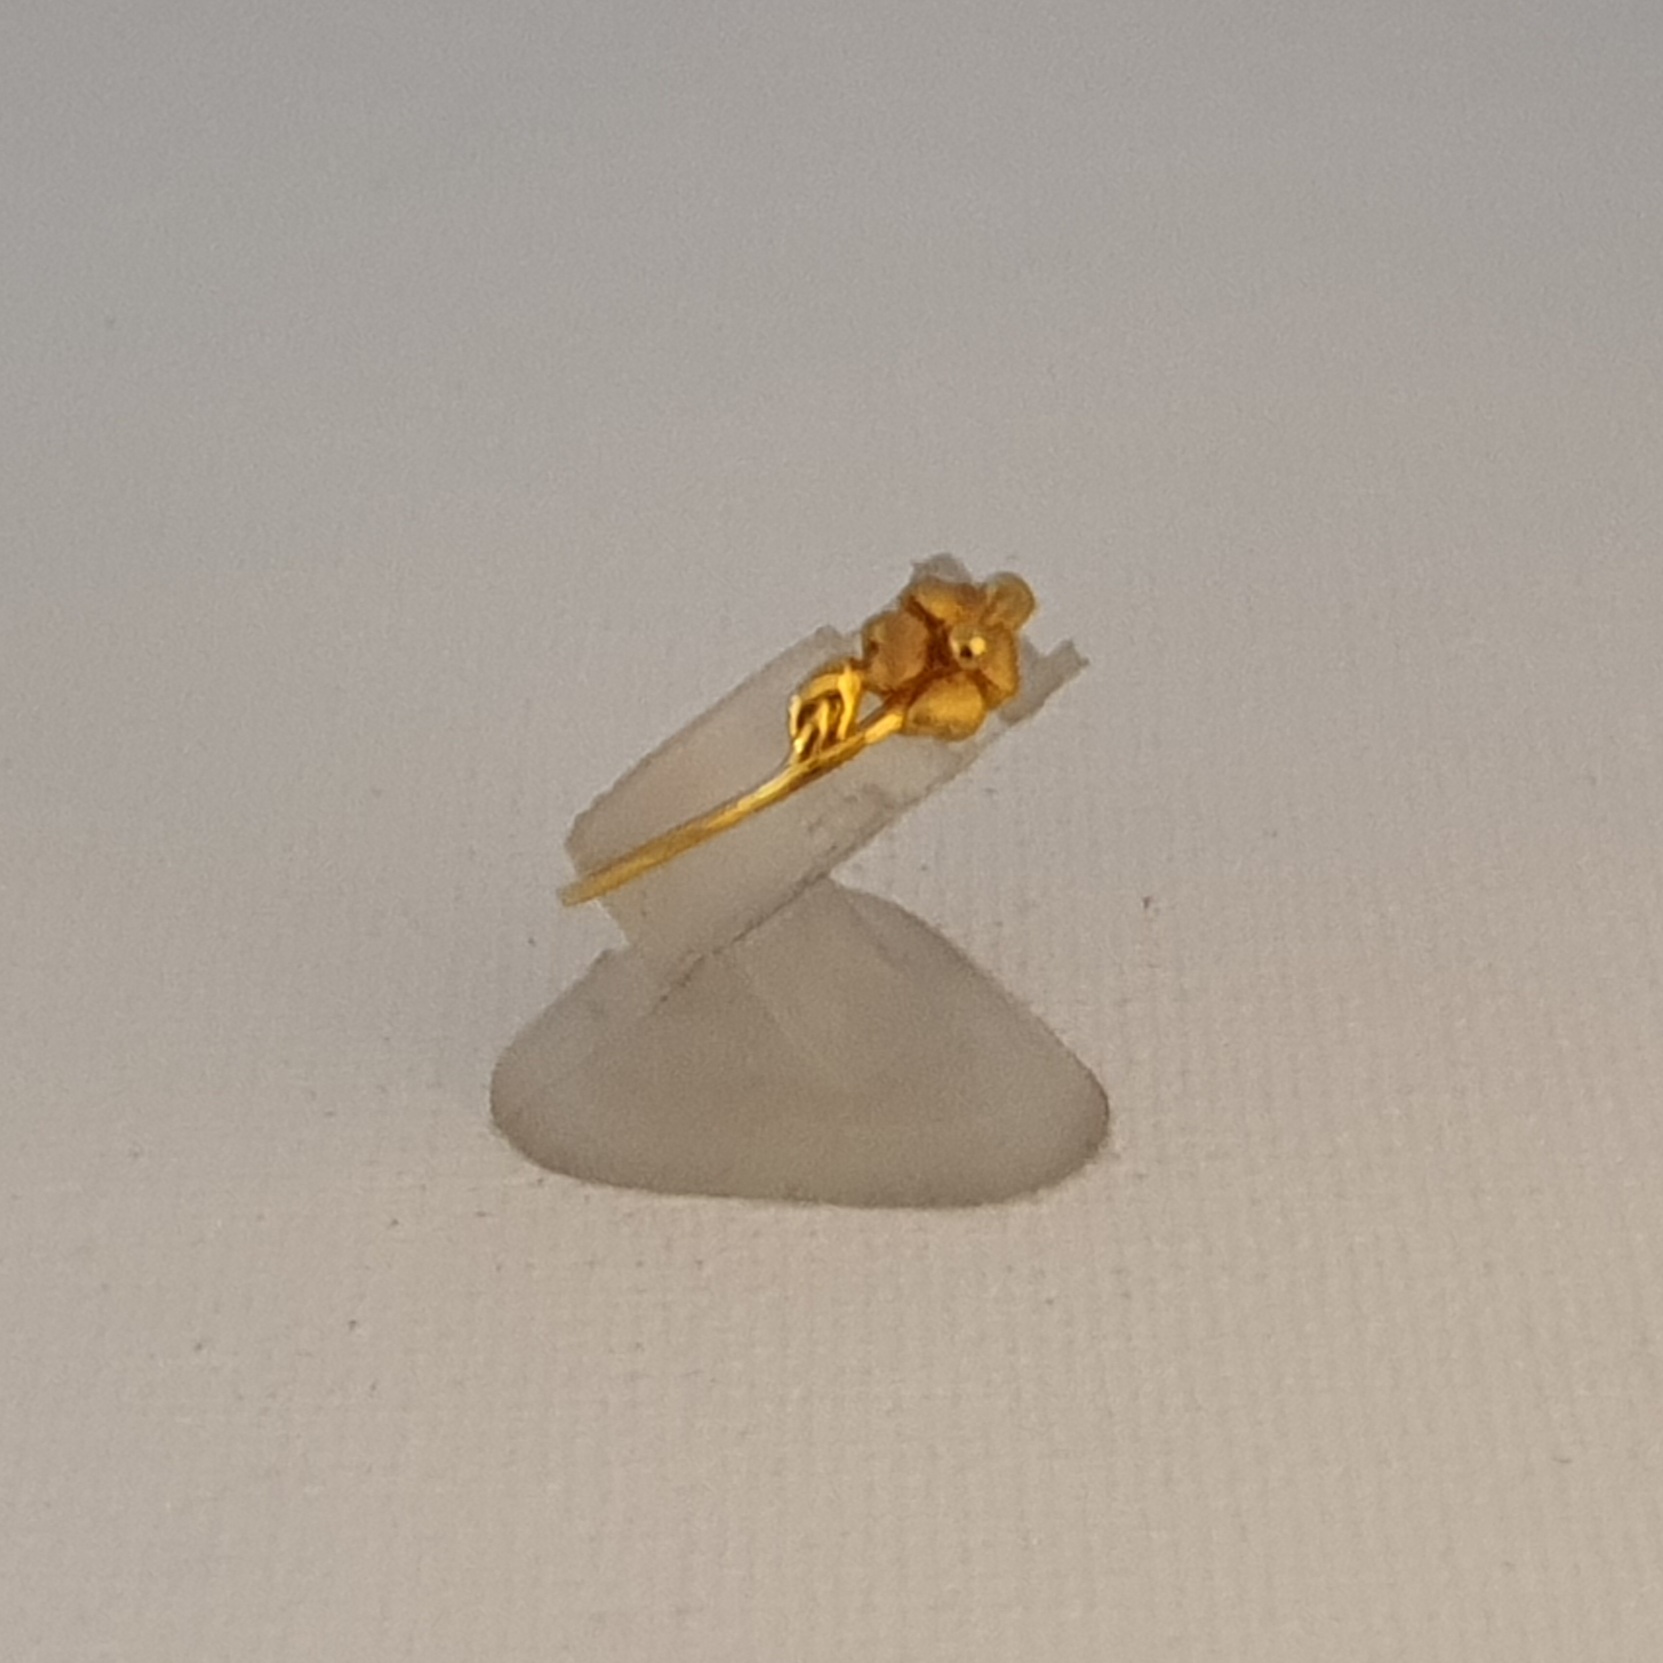 1 Gram Gold Plated With Diamond Eye-catching Design Ring For Ladies - Style  Lrg-066 at Rs 600.00 | सोने का पानी चढ़ी हुई अंगूठी - Soni Fashion, Rajkot  | ID: 2852576782755